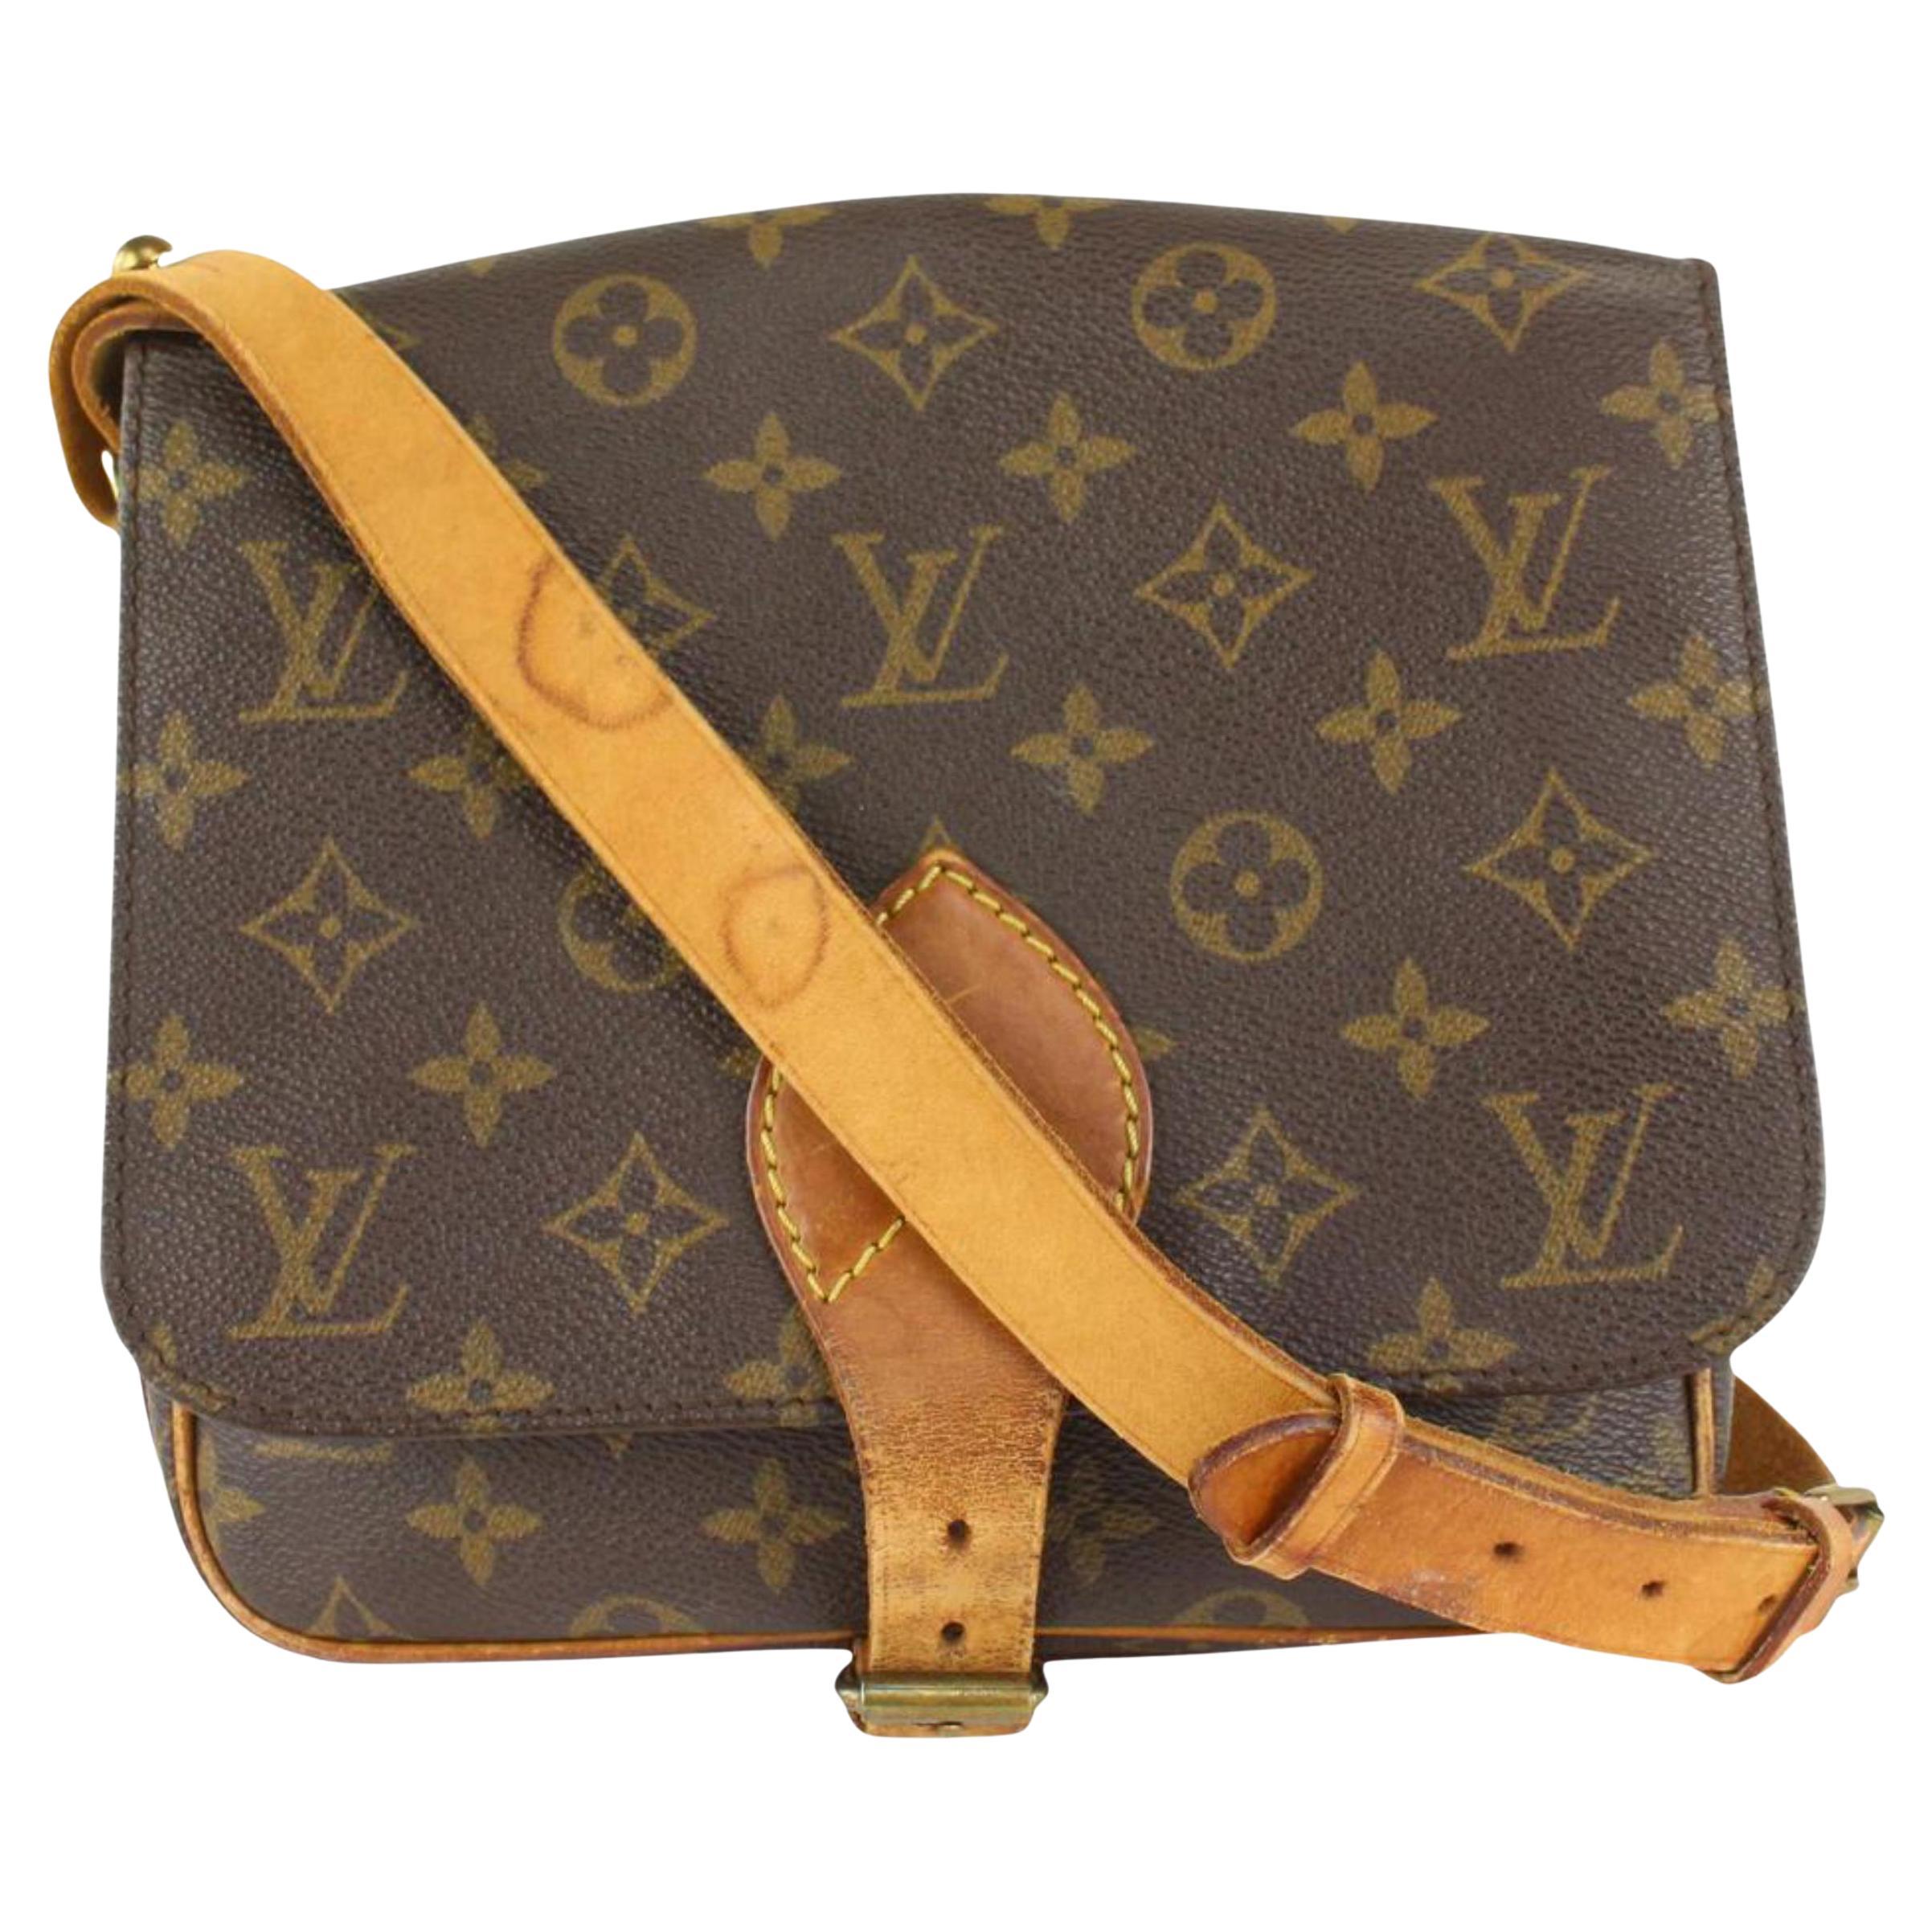 Louis Vuitton XL Monogram Danube GM Shoulder Bag 1lv88a